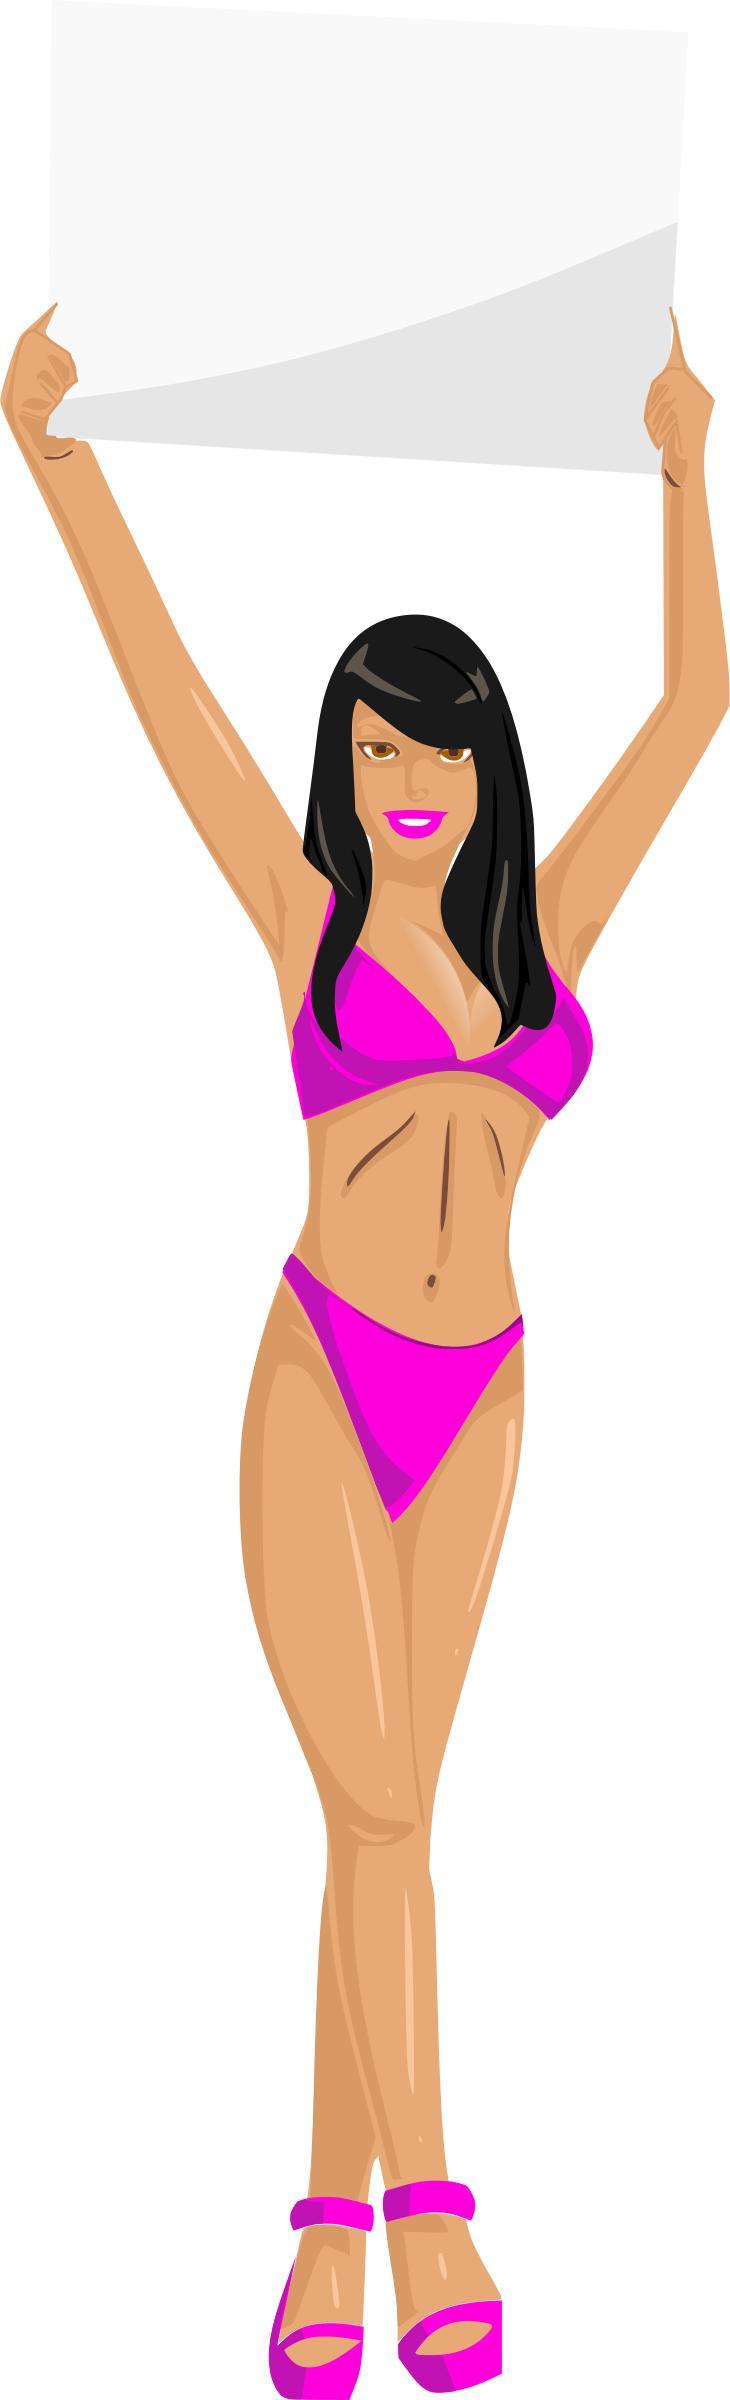 Girl with sign (pink bikini, black hair, light skin) png transparent